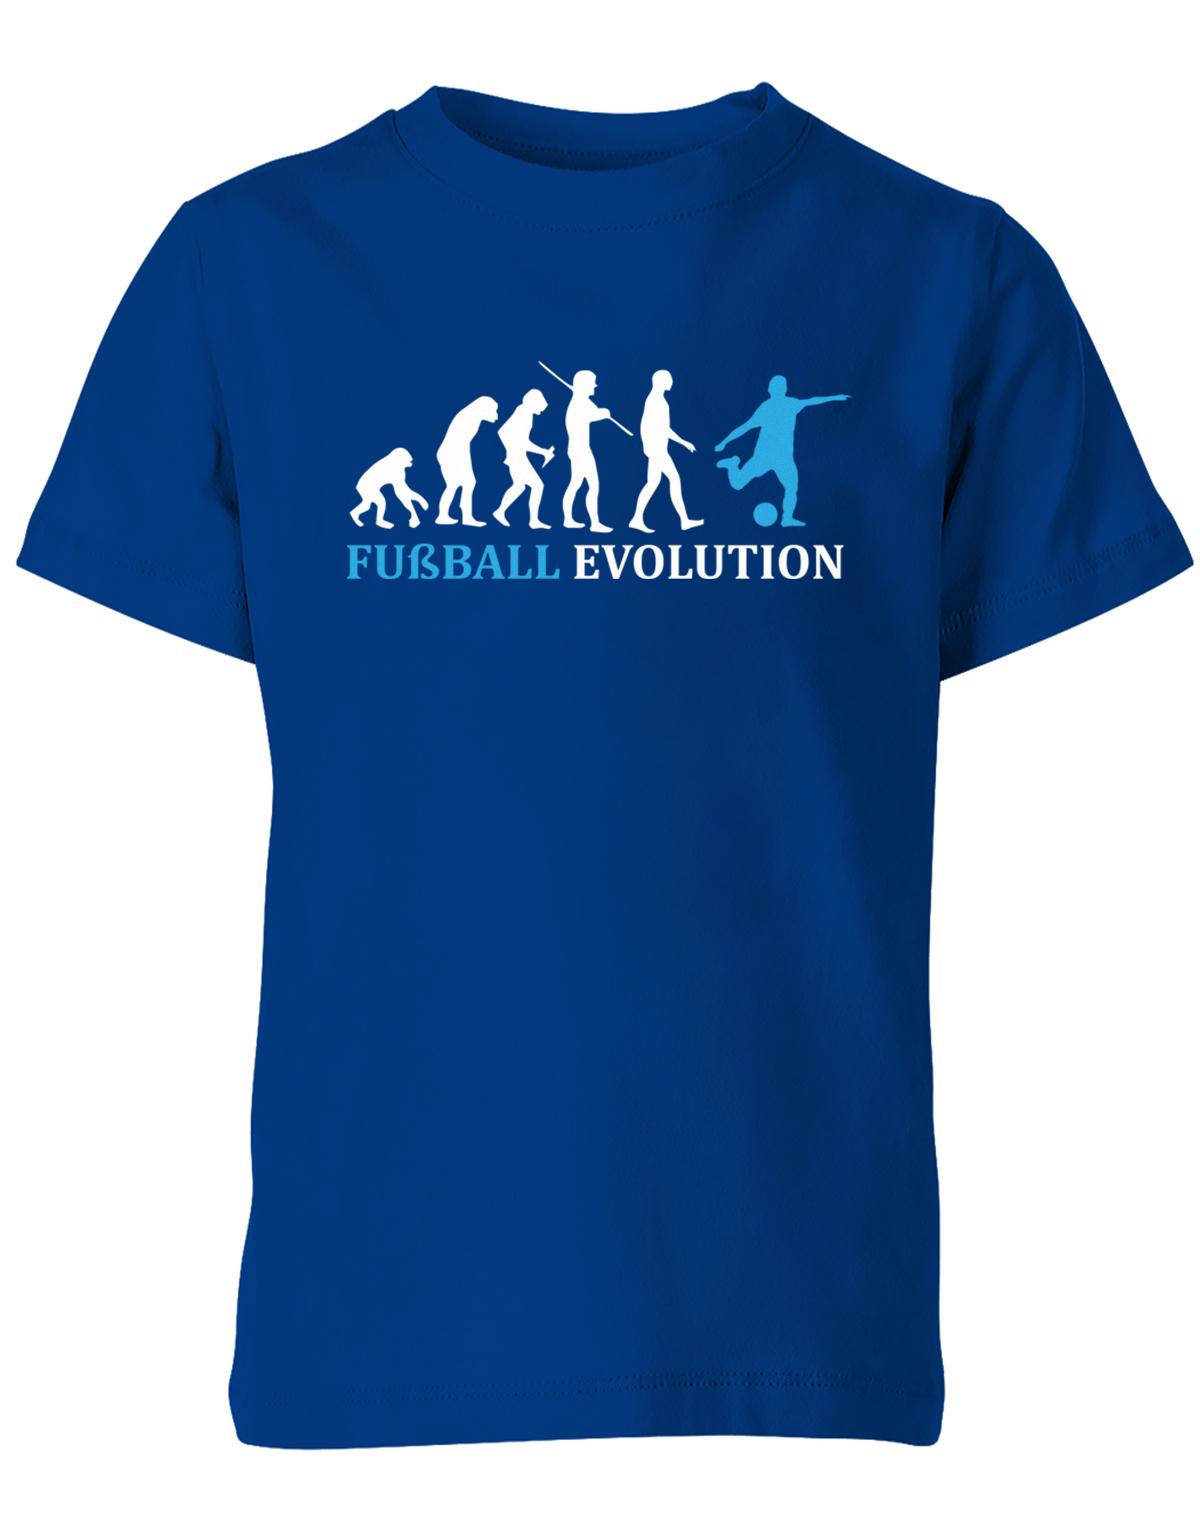 Fussball-Evolution-Kinder-Shirt-Royalblau-Hellblau